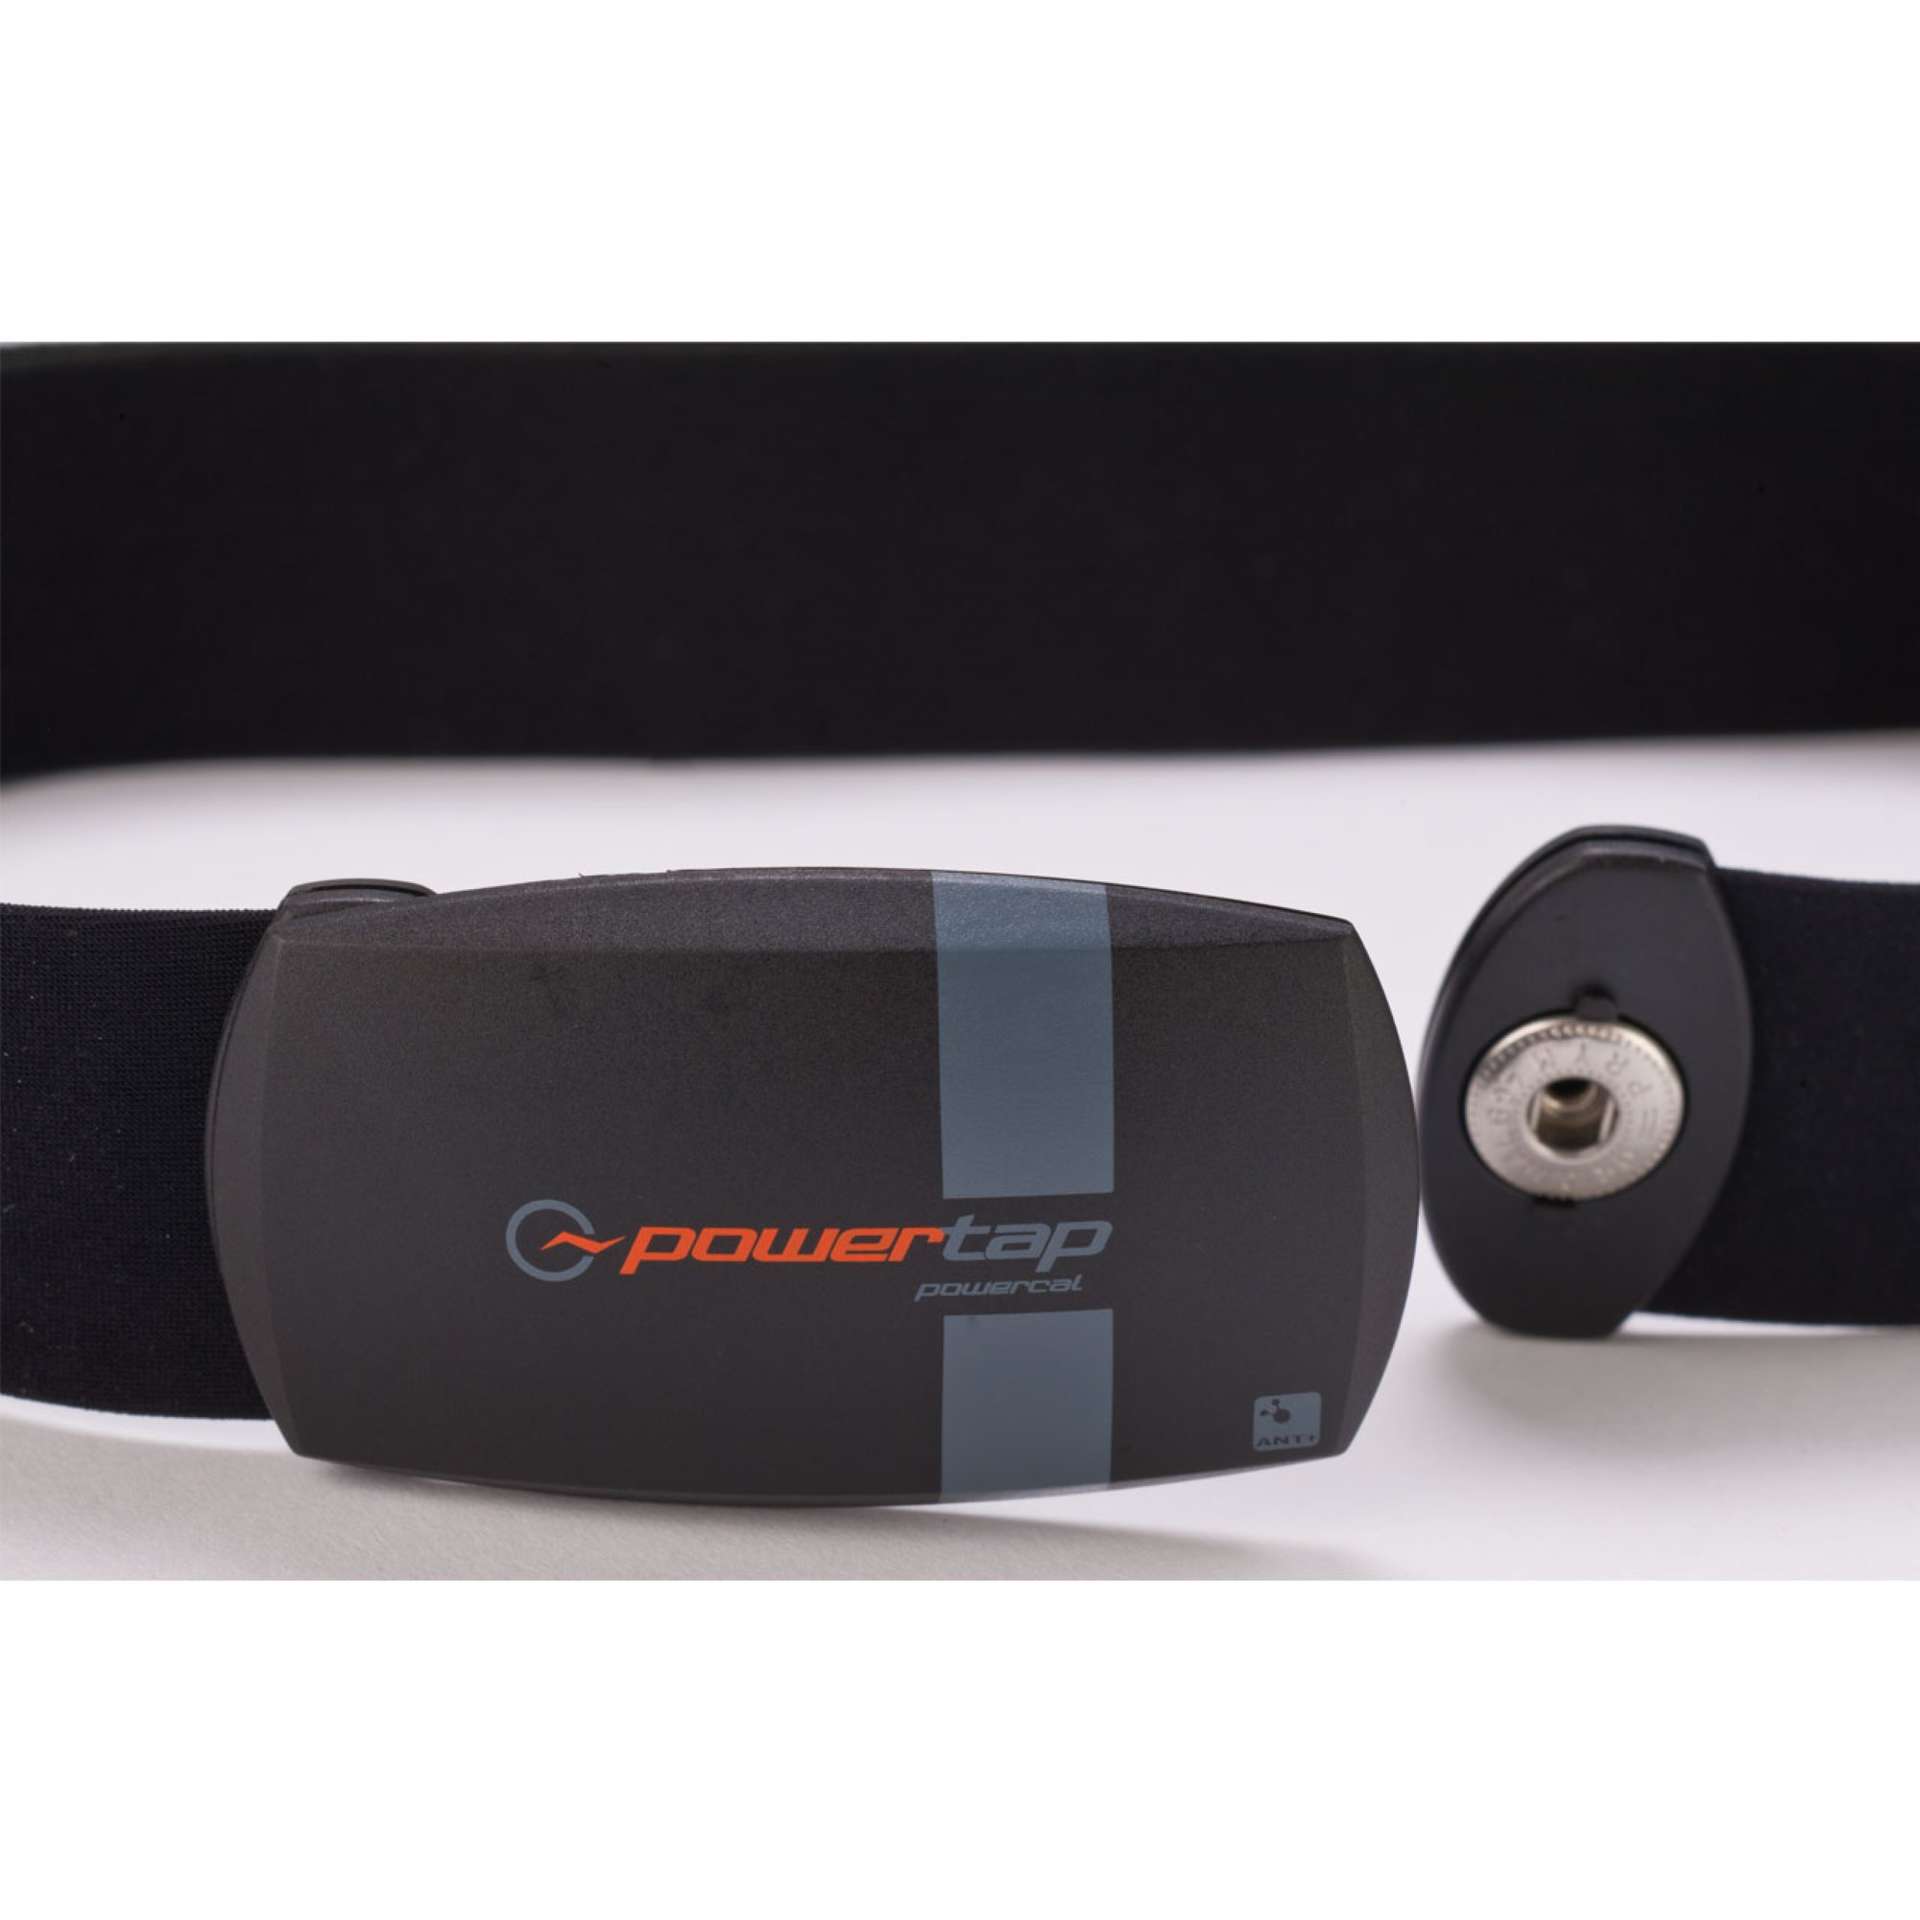 Powertap PowerCal Dual ANT+/Bluetooth